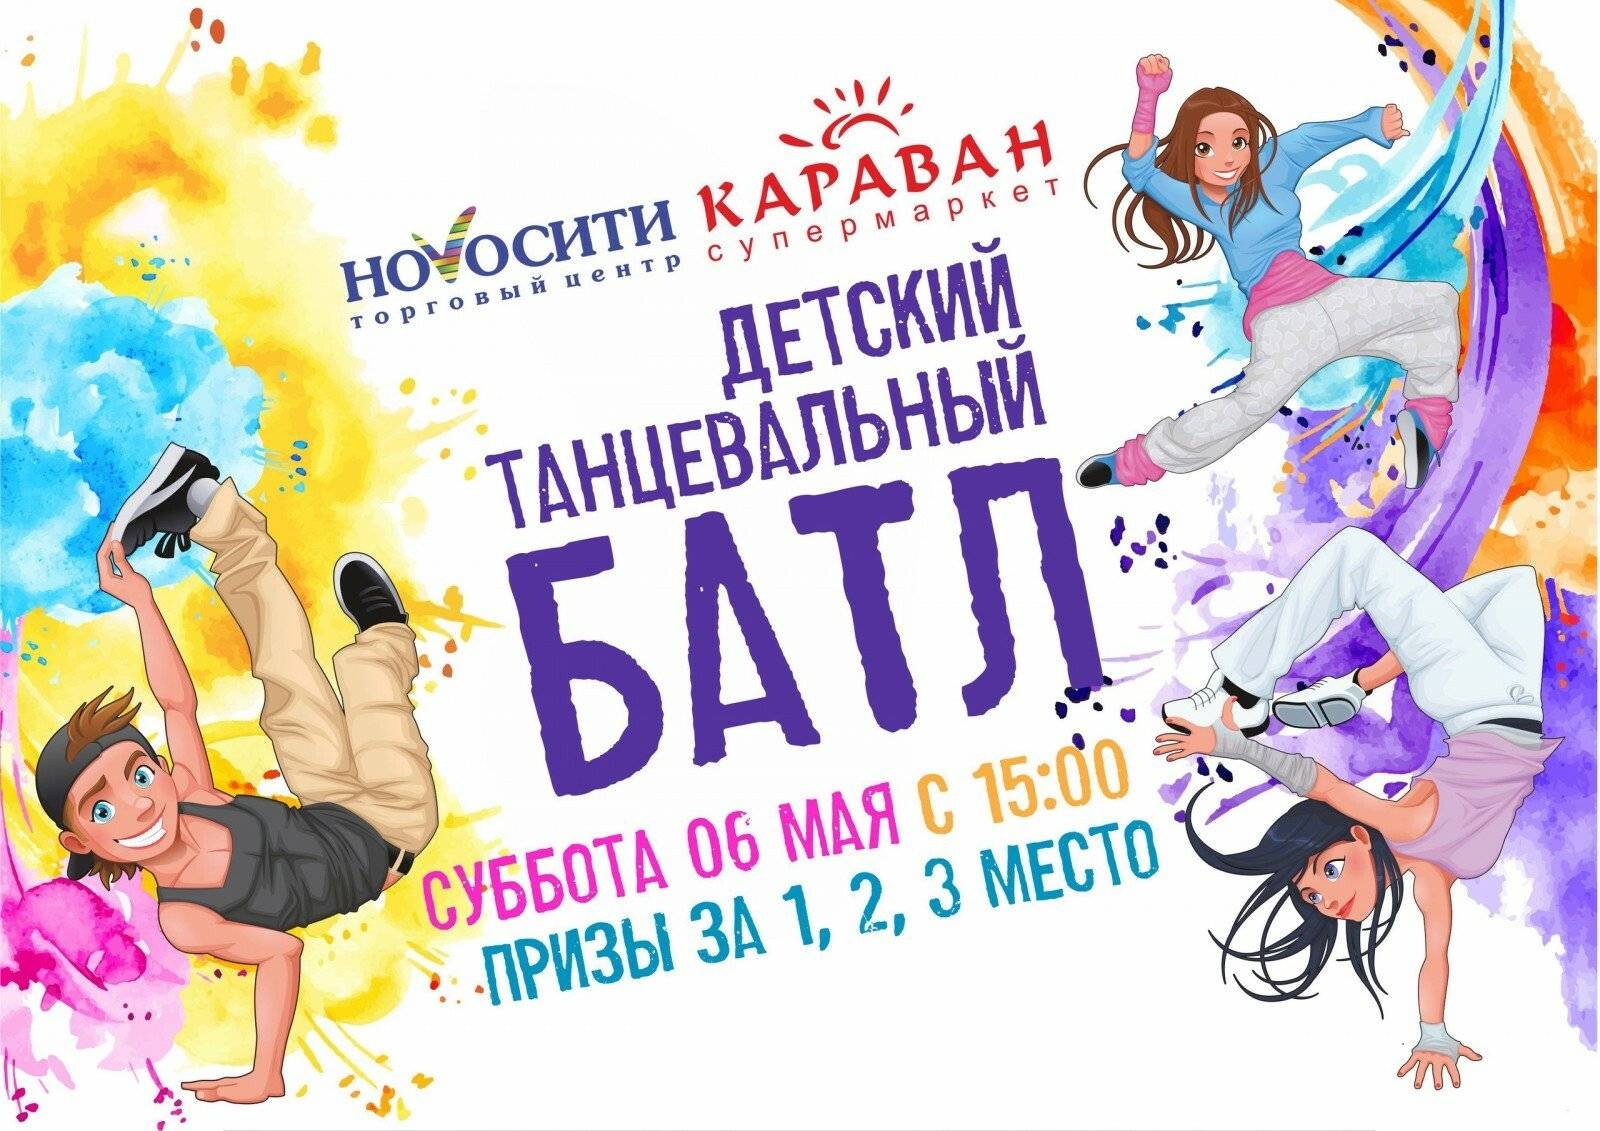 Звёздный час — gameshows.ru